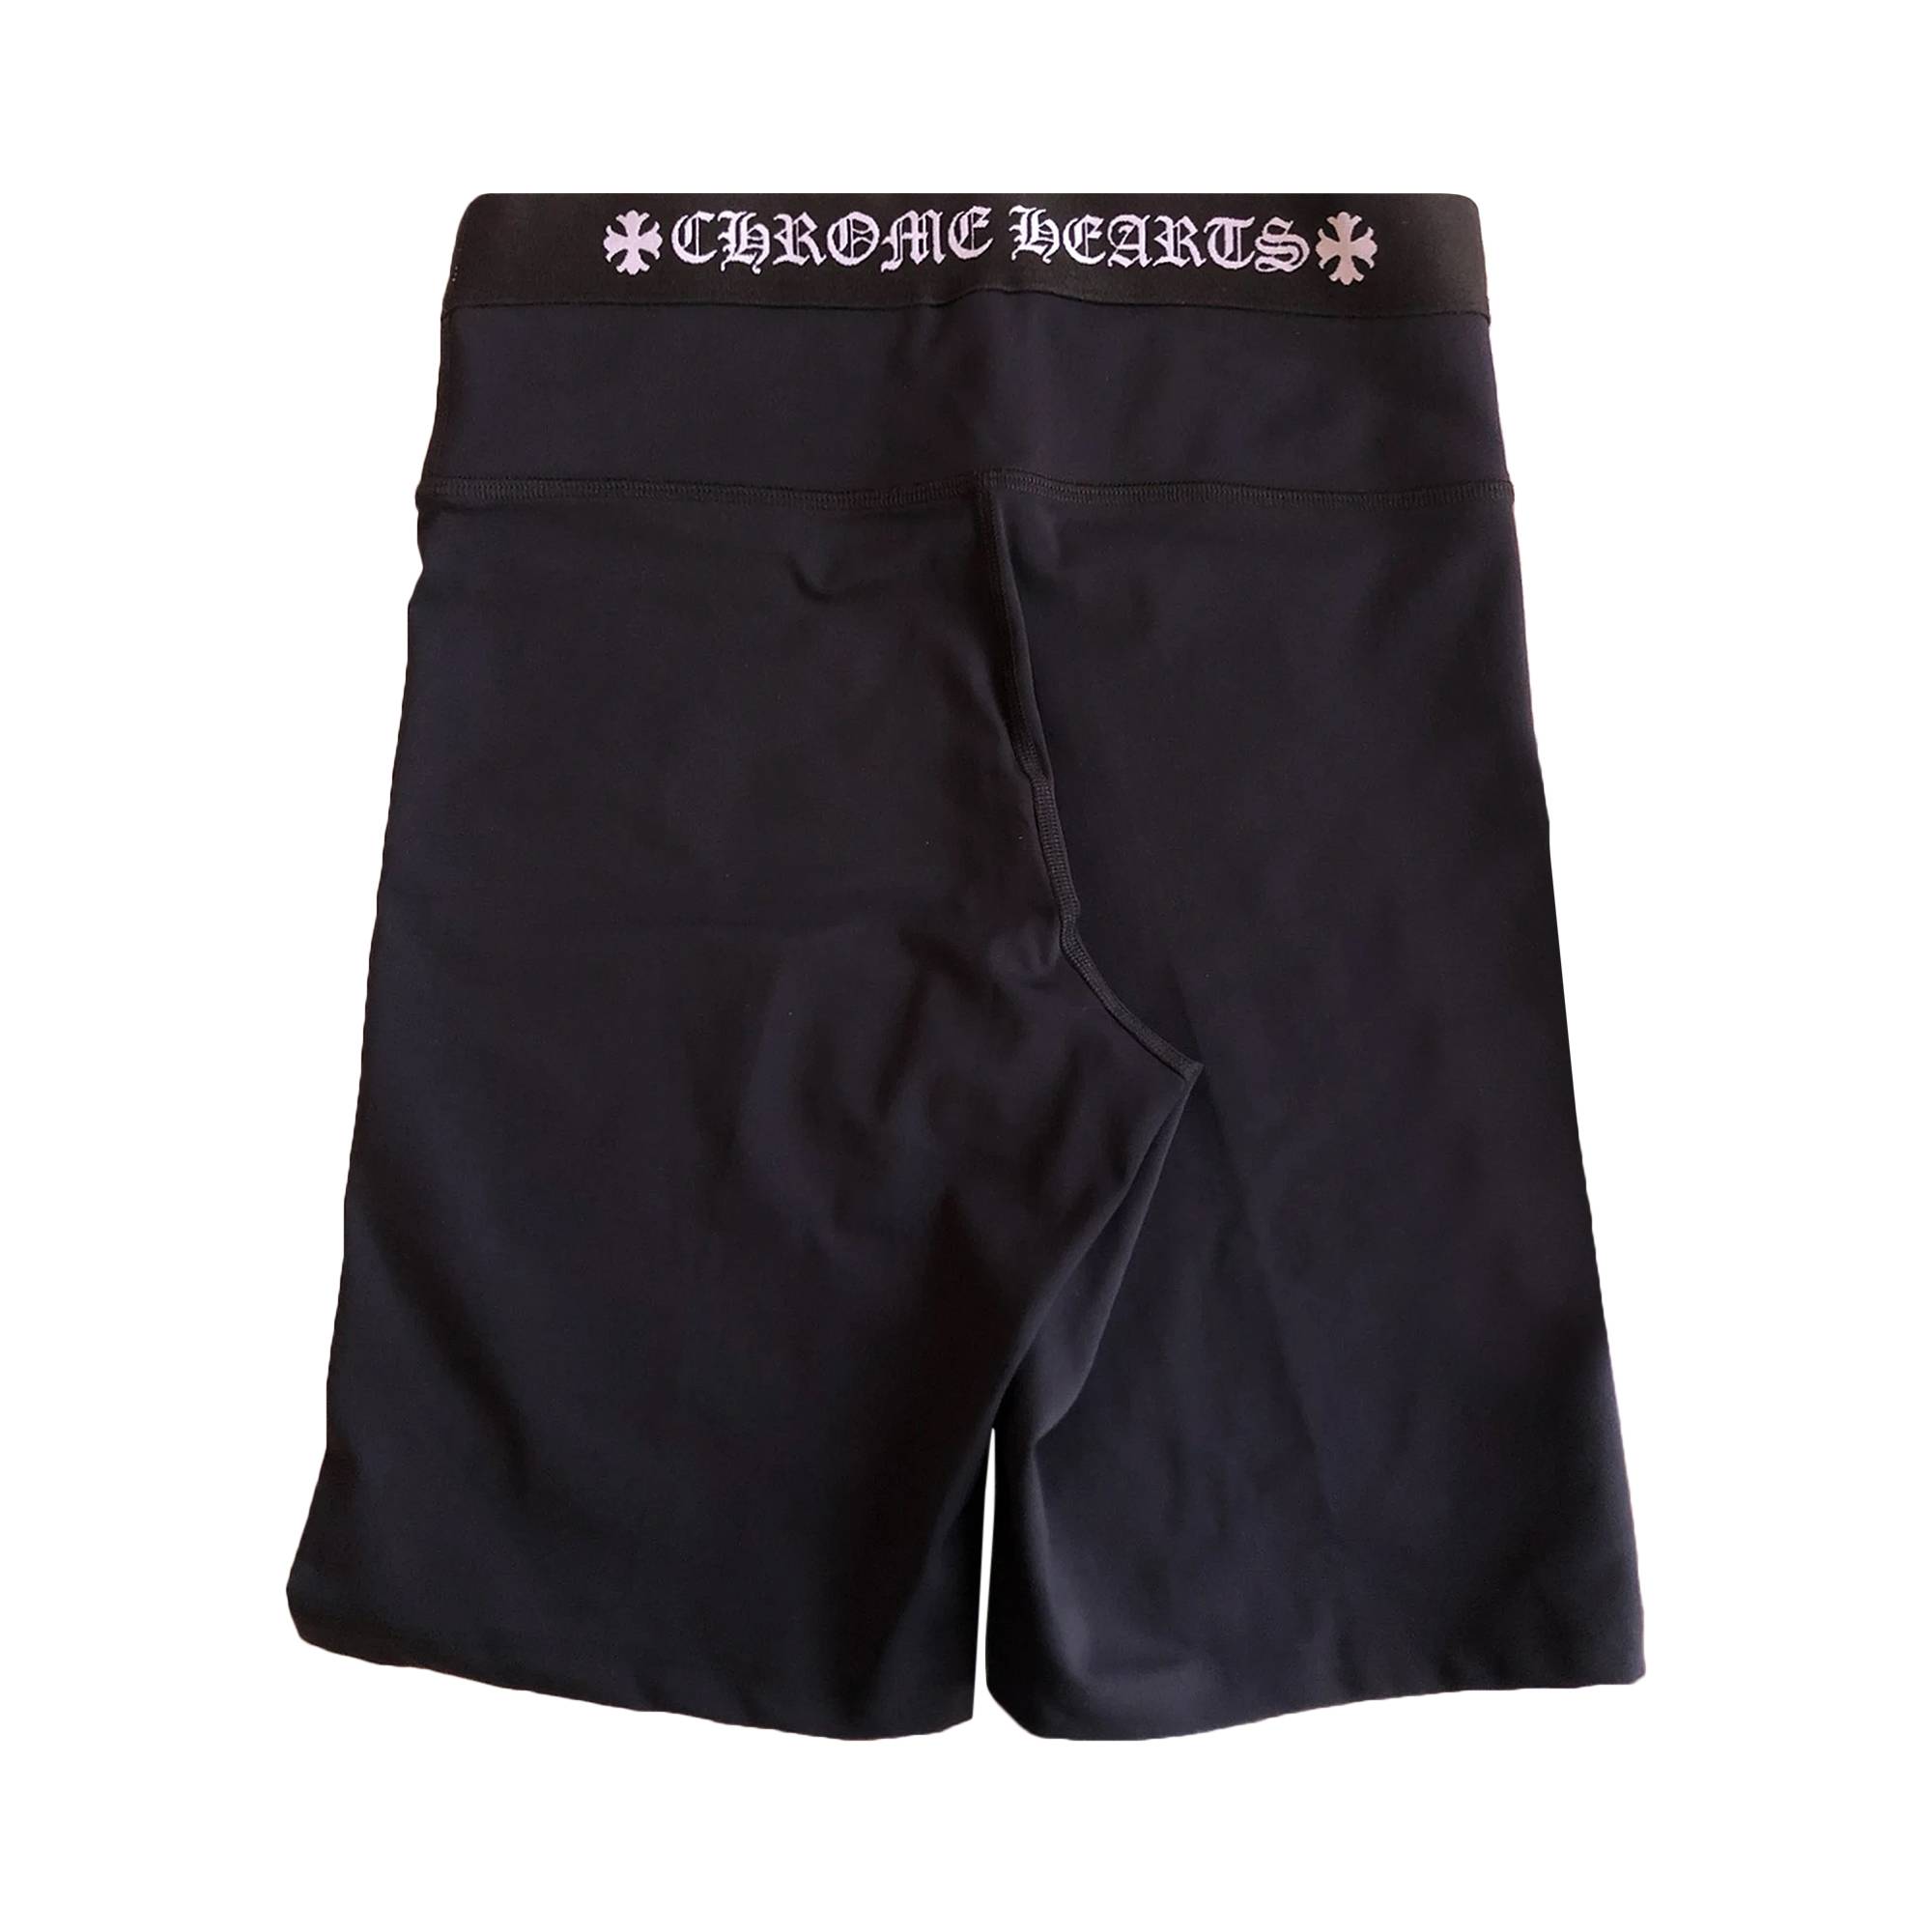 Chrome Hearts x Matty Boy Thermal Biker Shorts 'Black/Pink' - Chrome ...